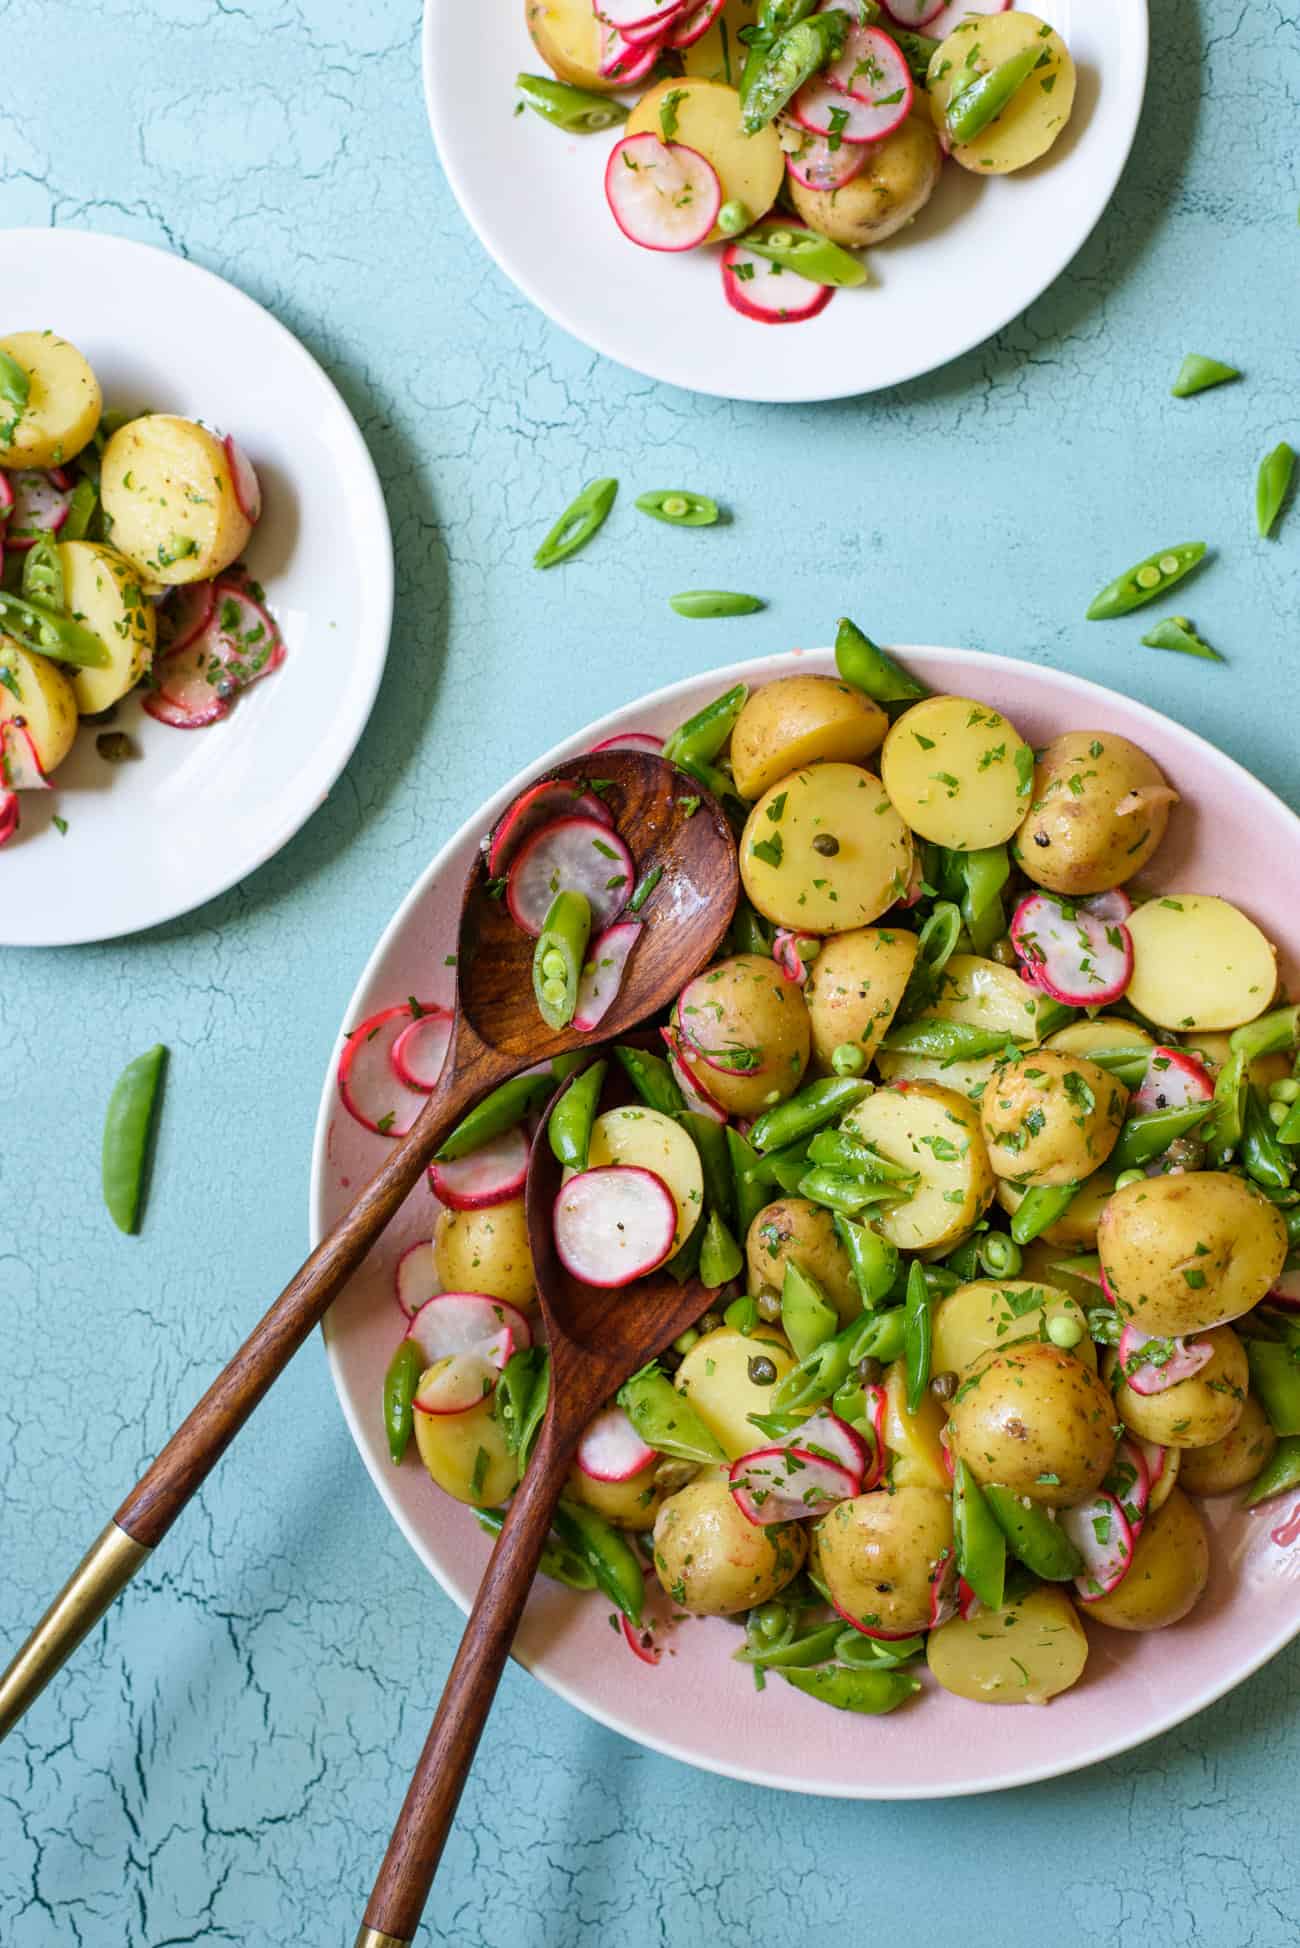 Mayo-less potato salad with radishes and sugar snap peas